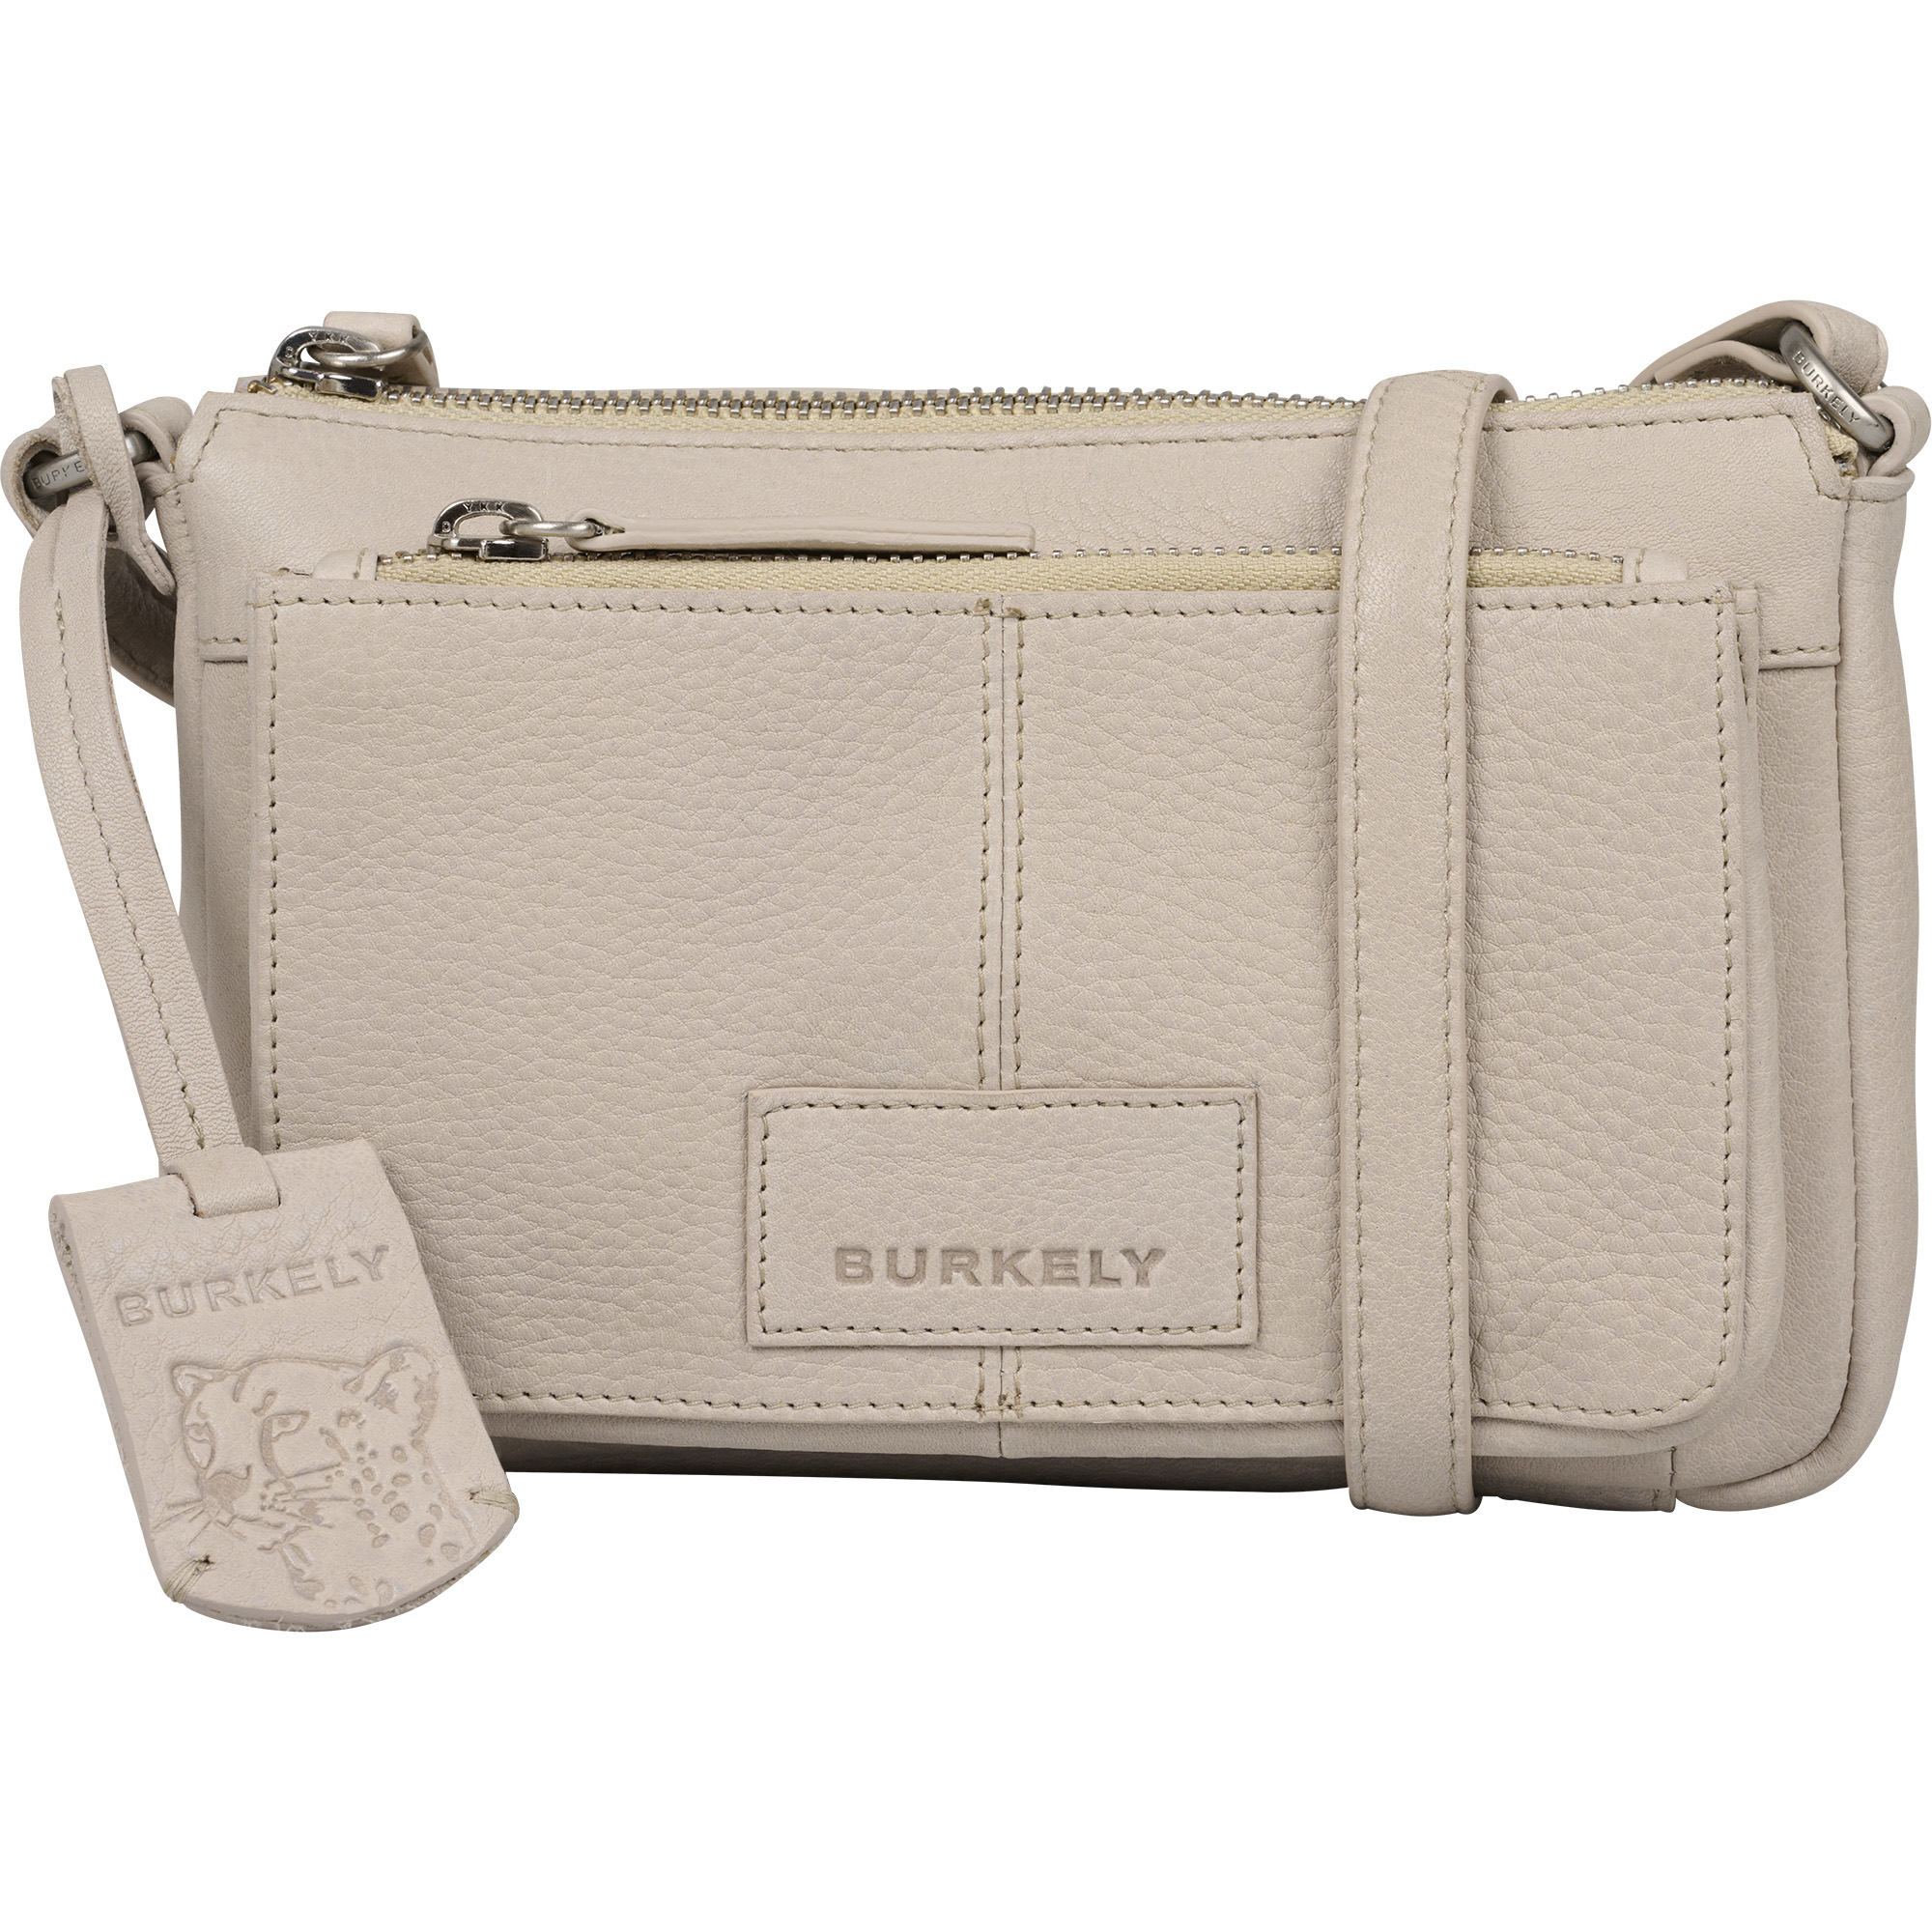 Burkely 1000345 Minibag 85.12 Grey